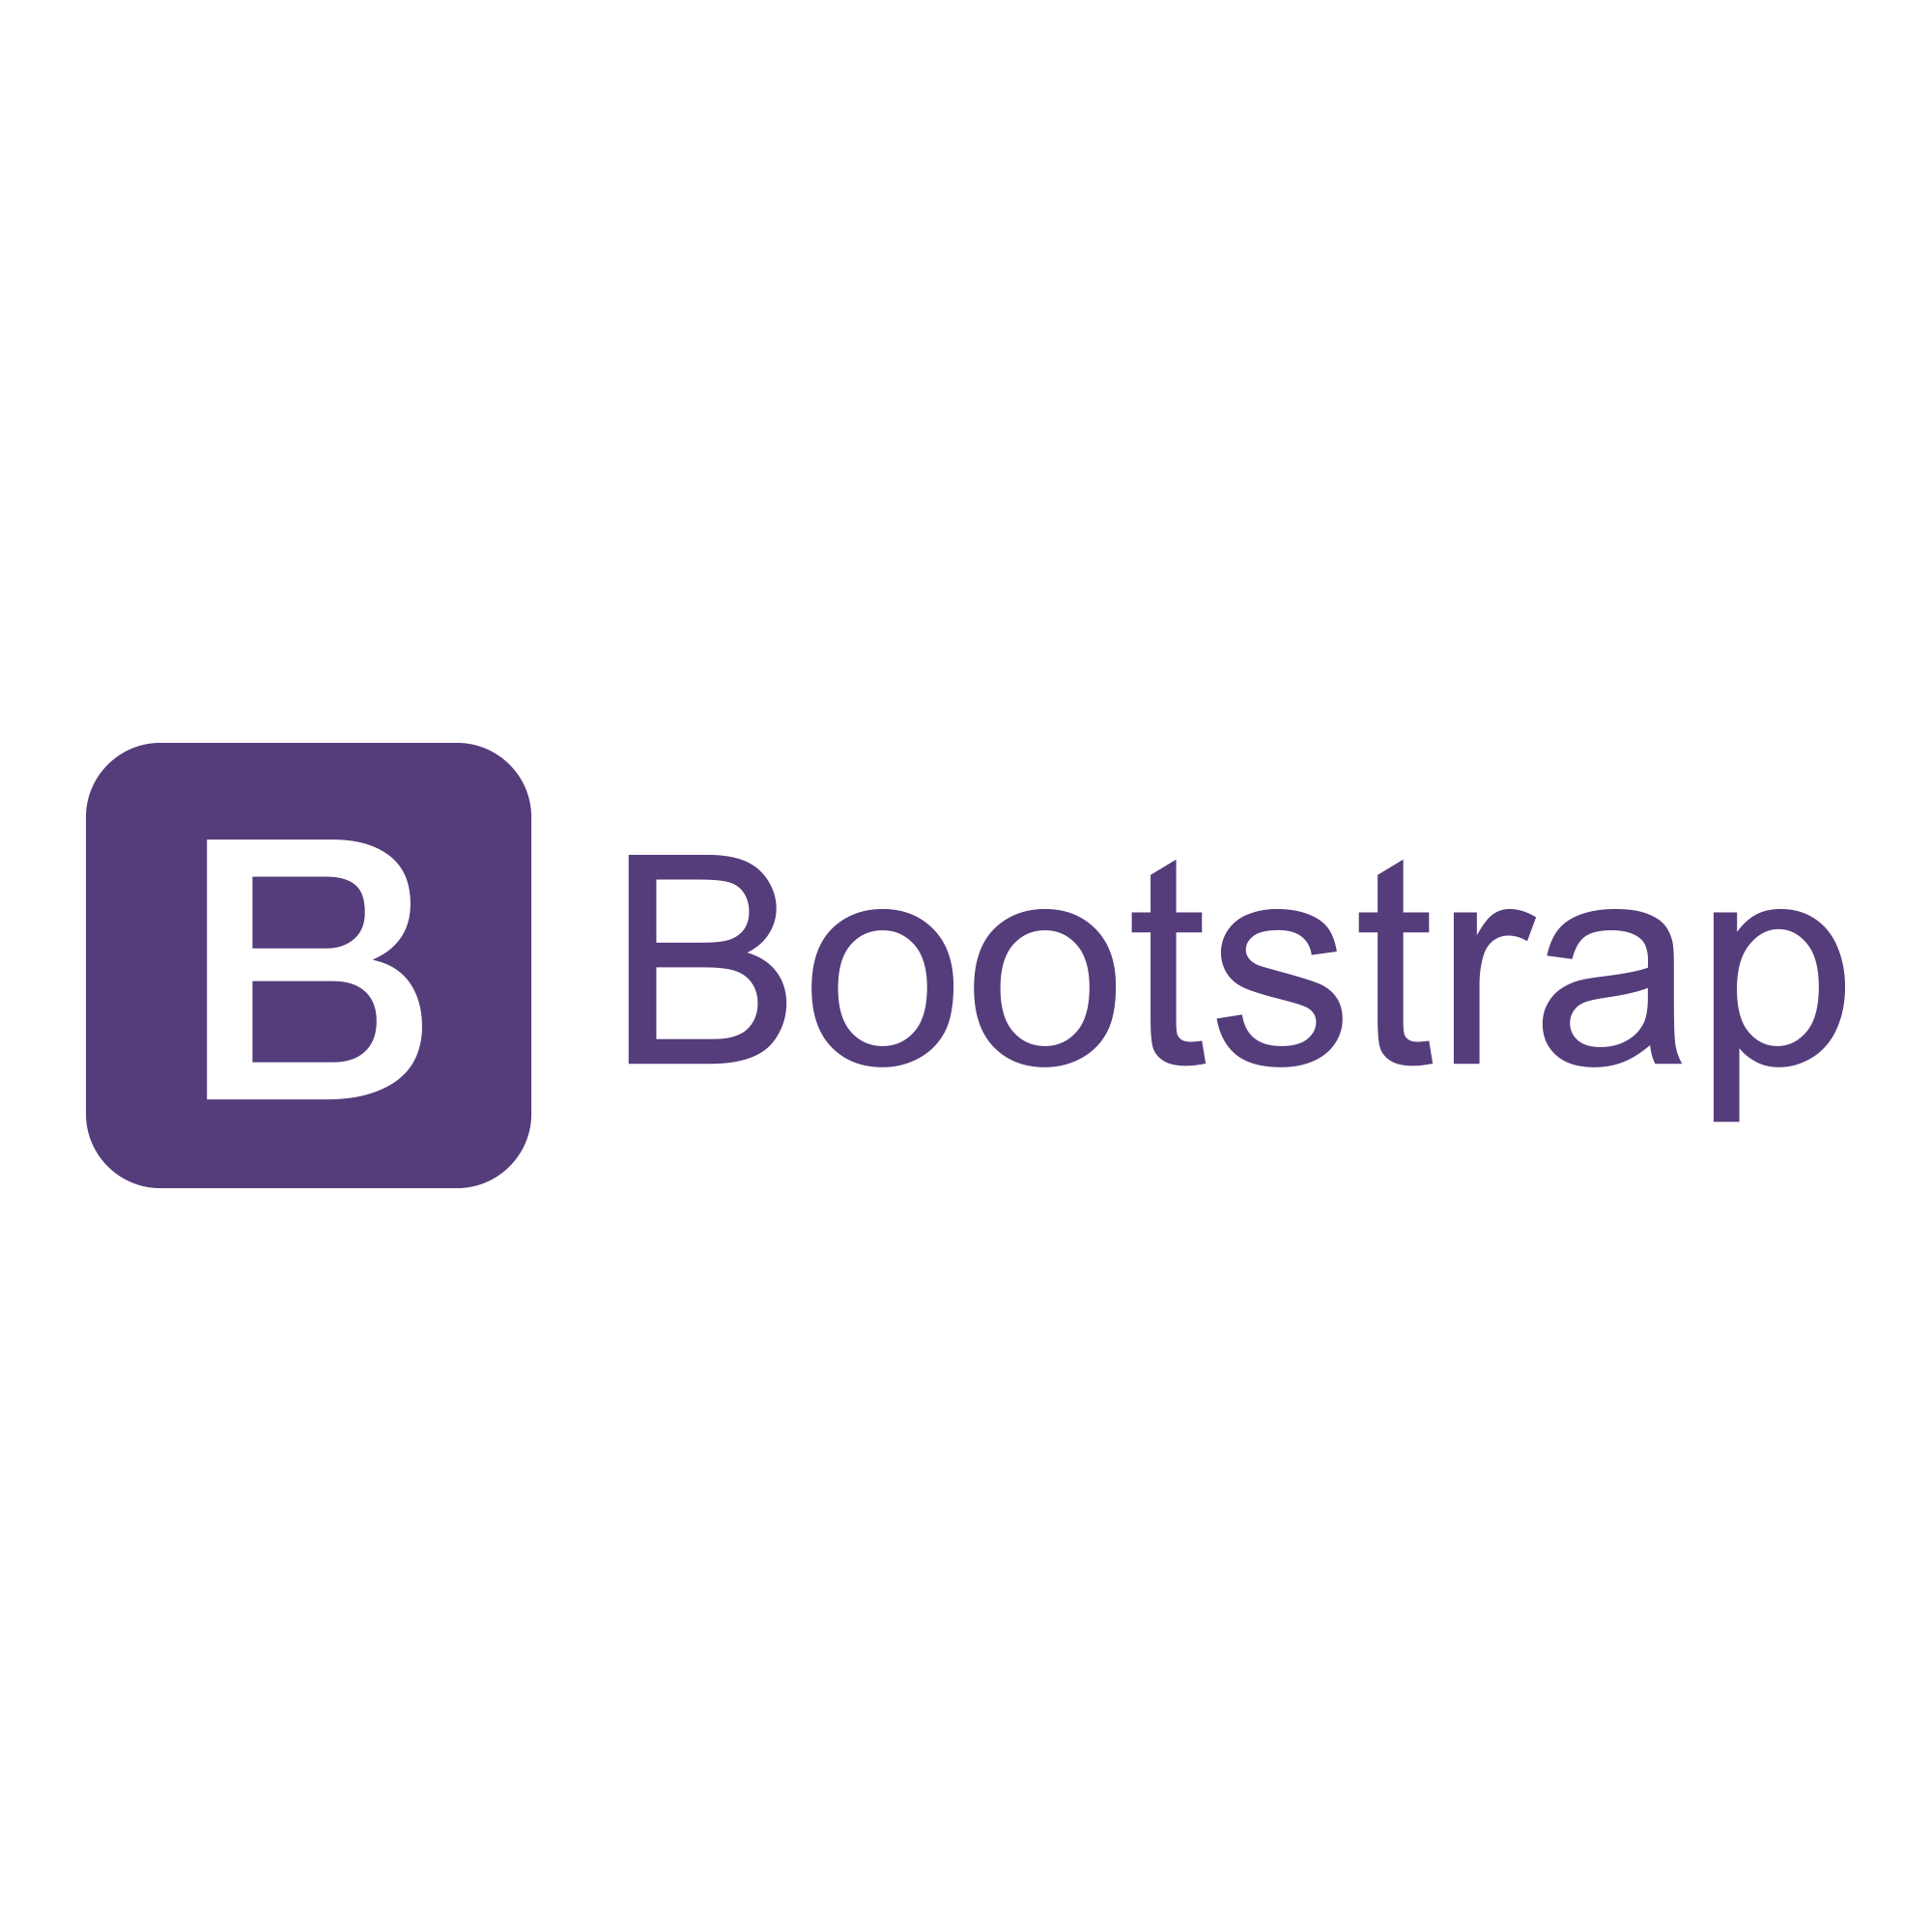 Bootstrap d. Bootstrap. Картинка Bootstrap. Бутстрап логотип. Логотип Bootstrap PNG.